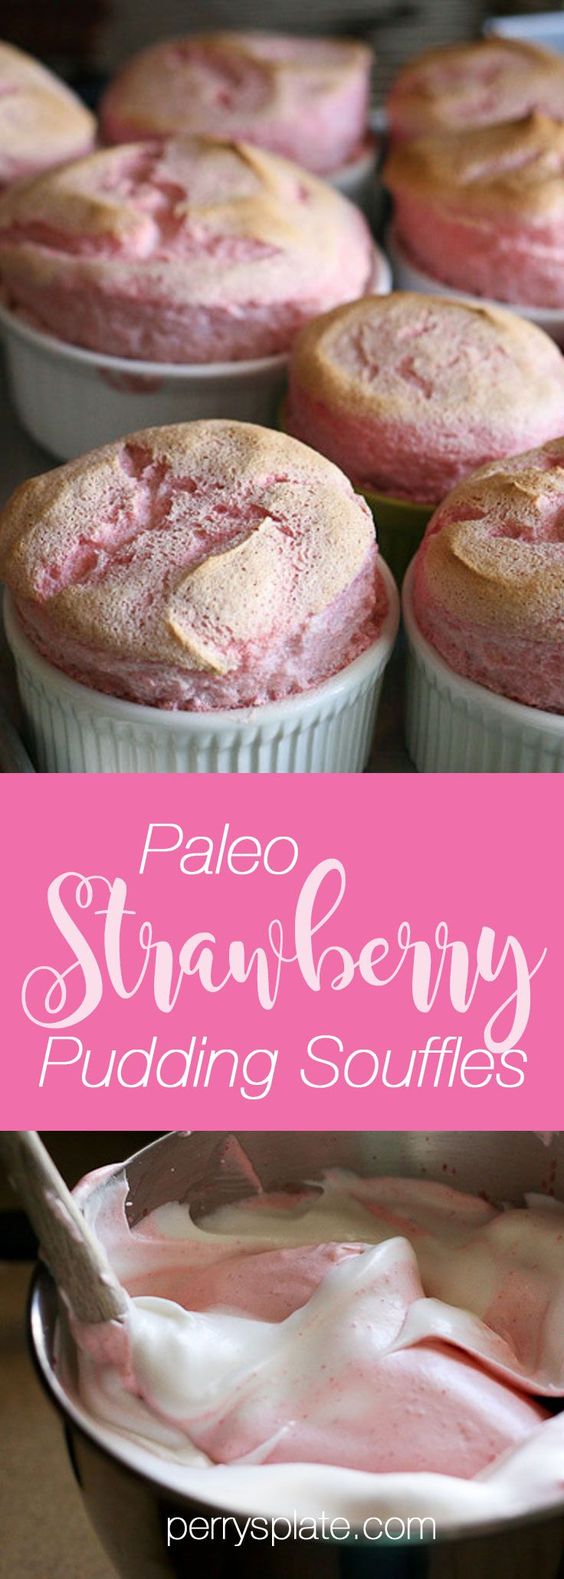 Strawberry Pudding Soufflés (Paleo)